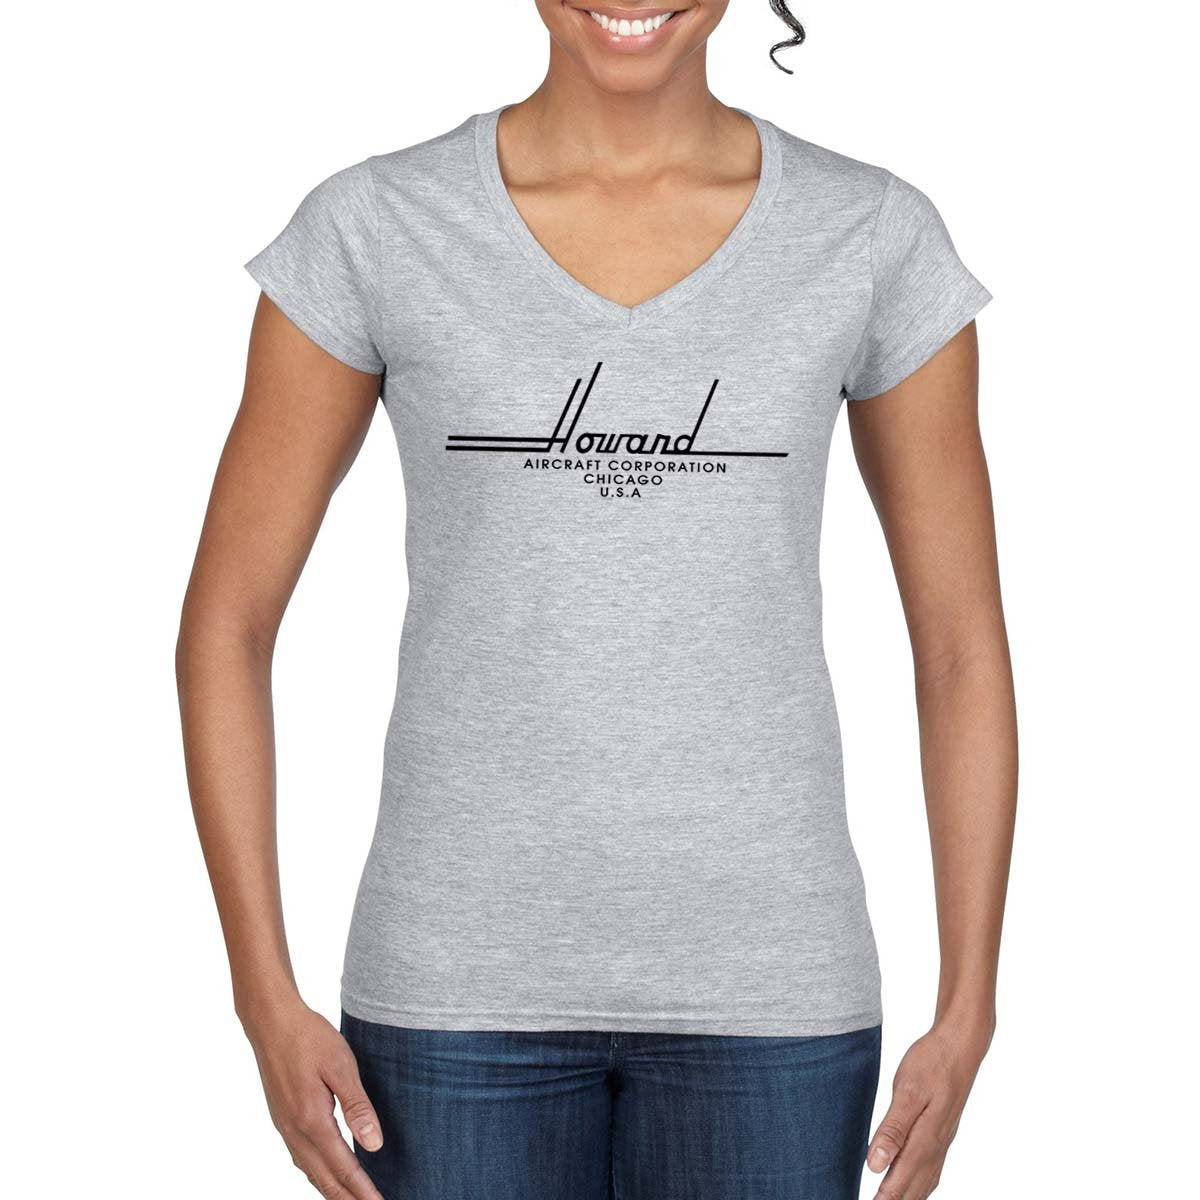 HOWARD AIRCRAFT CORPORATION Vintage Design Women's T-Shirt